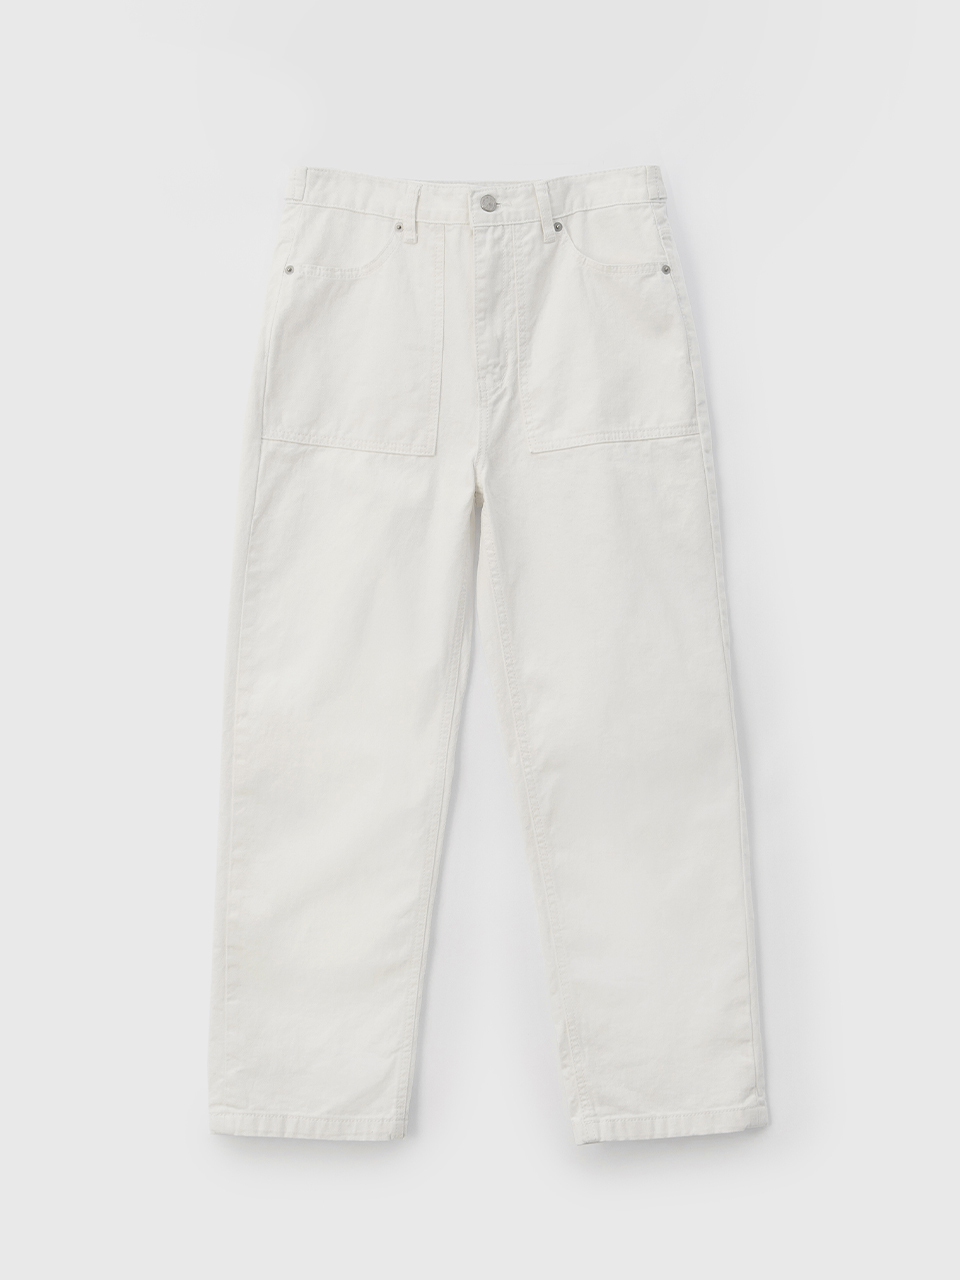 loosefit cotton pants - off whiteBRENDA BRENDEN